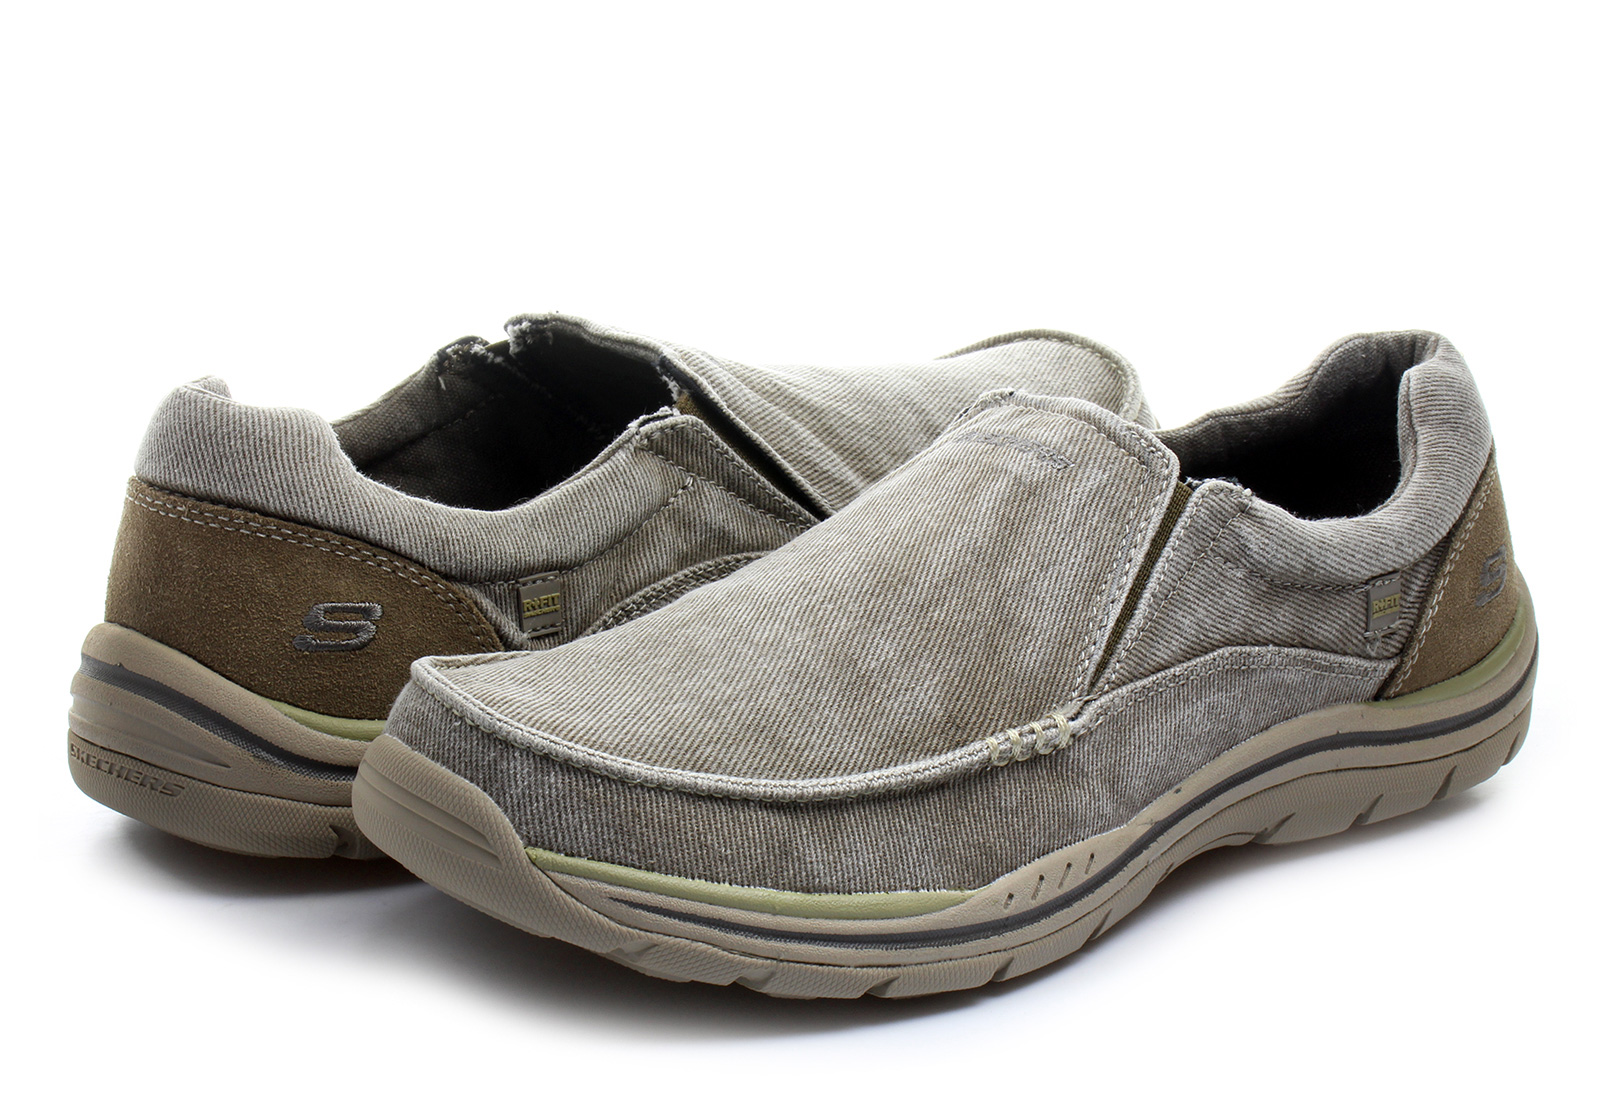 Skechers Shoes - Avillo - 64109-KHK - Online shop for sneakers, shoes ...